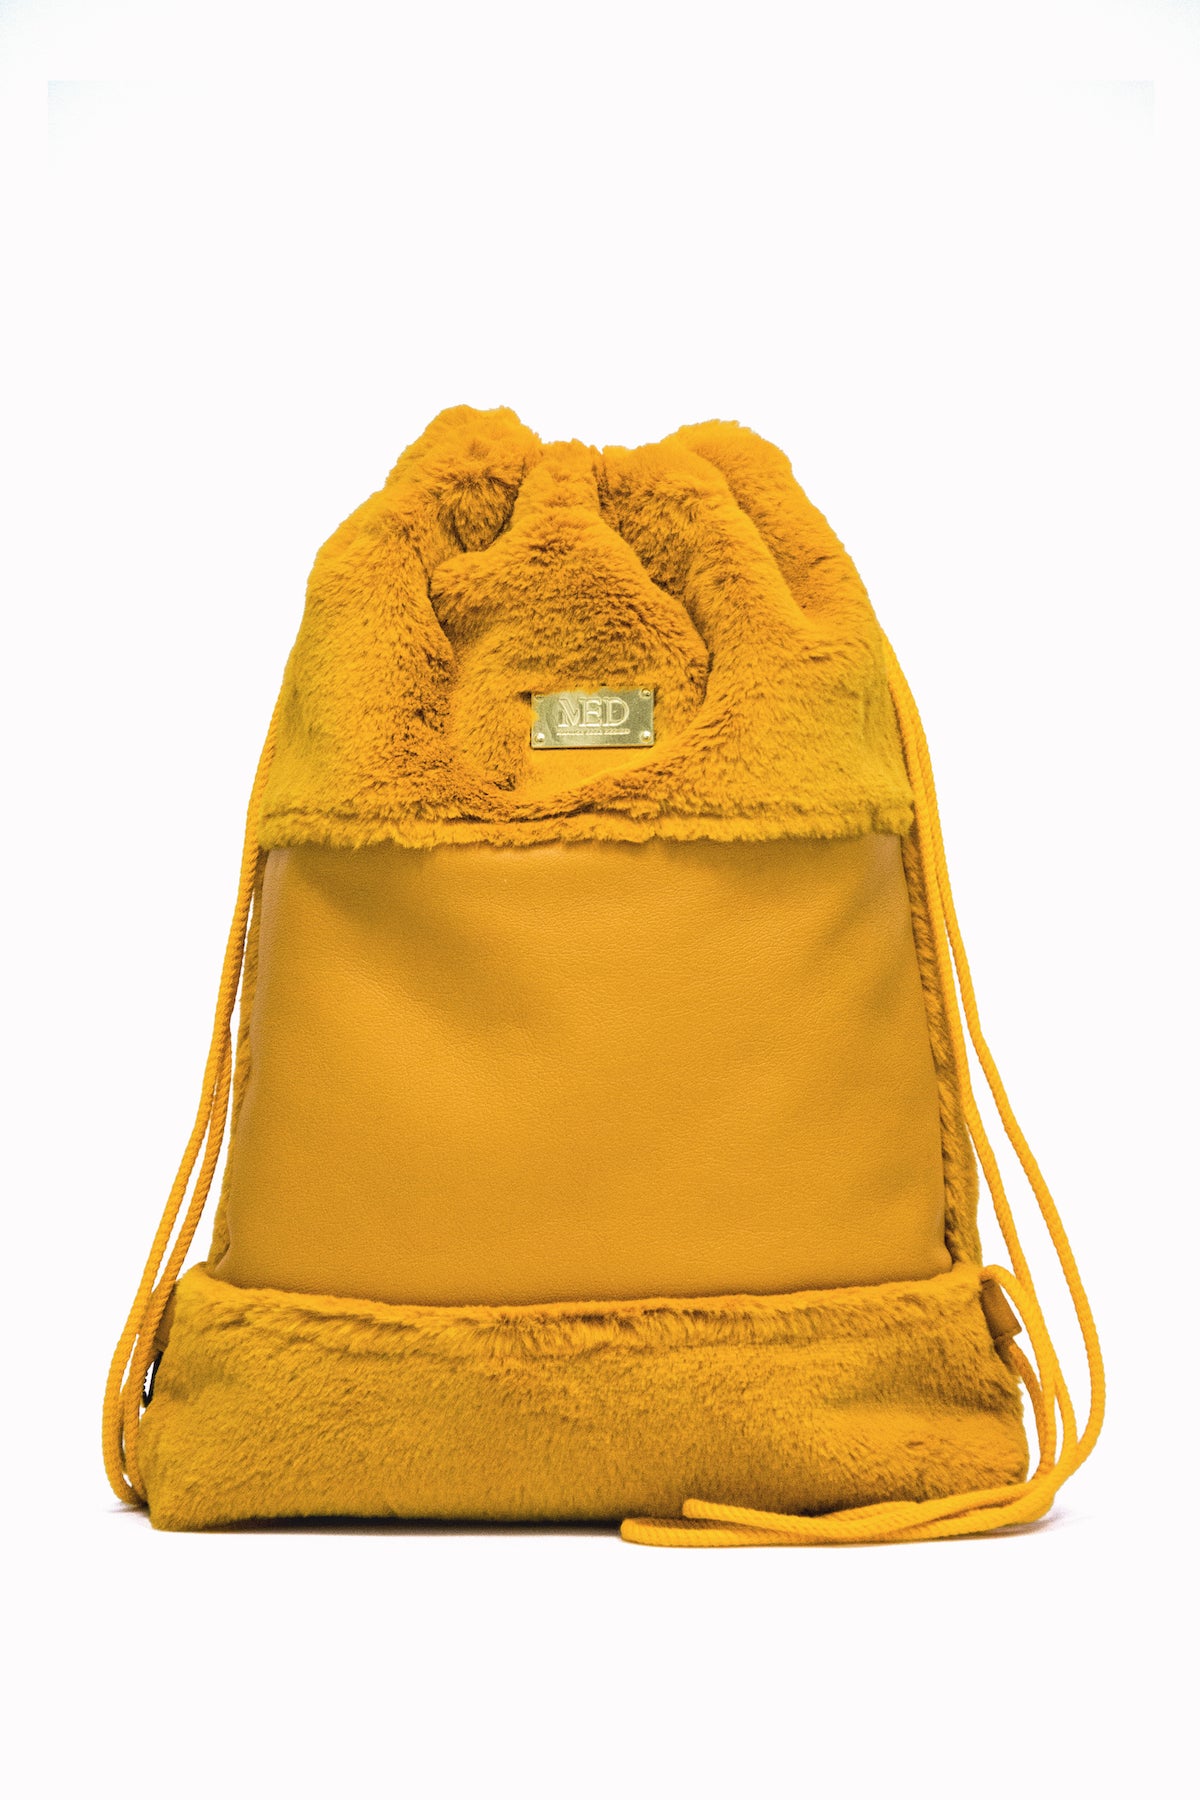 Gym Bag "FLUFFY" - Mustard - Manuel Essl Design